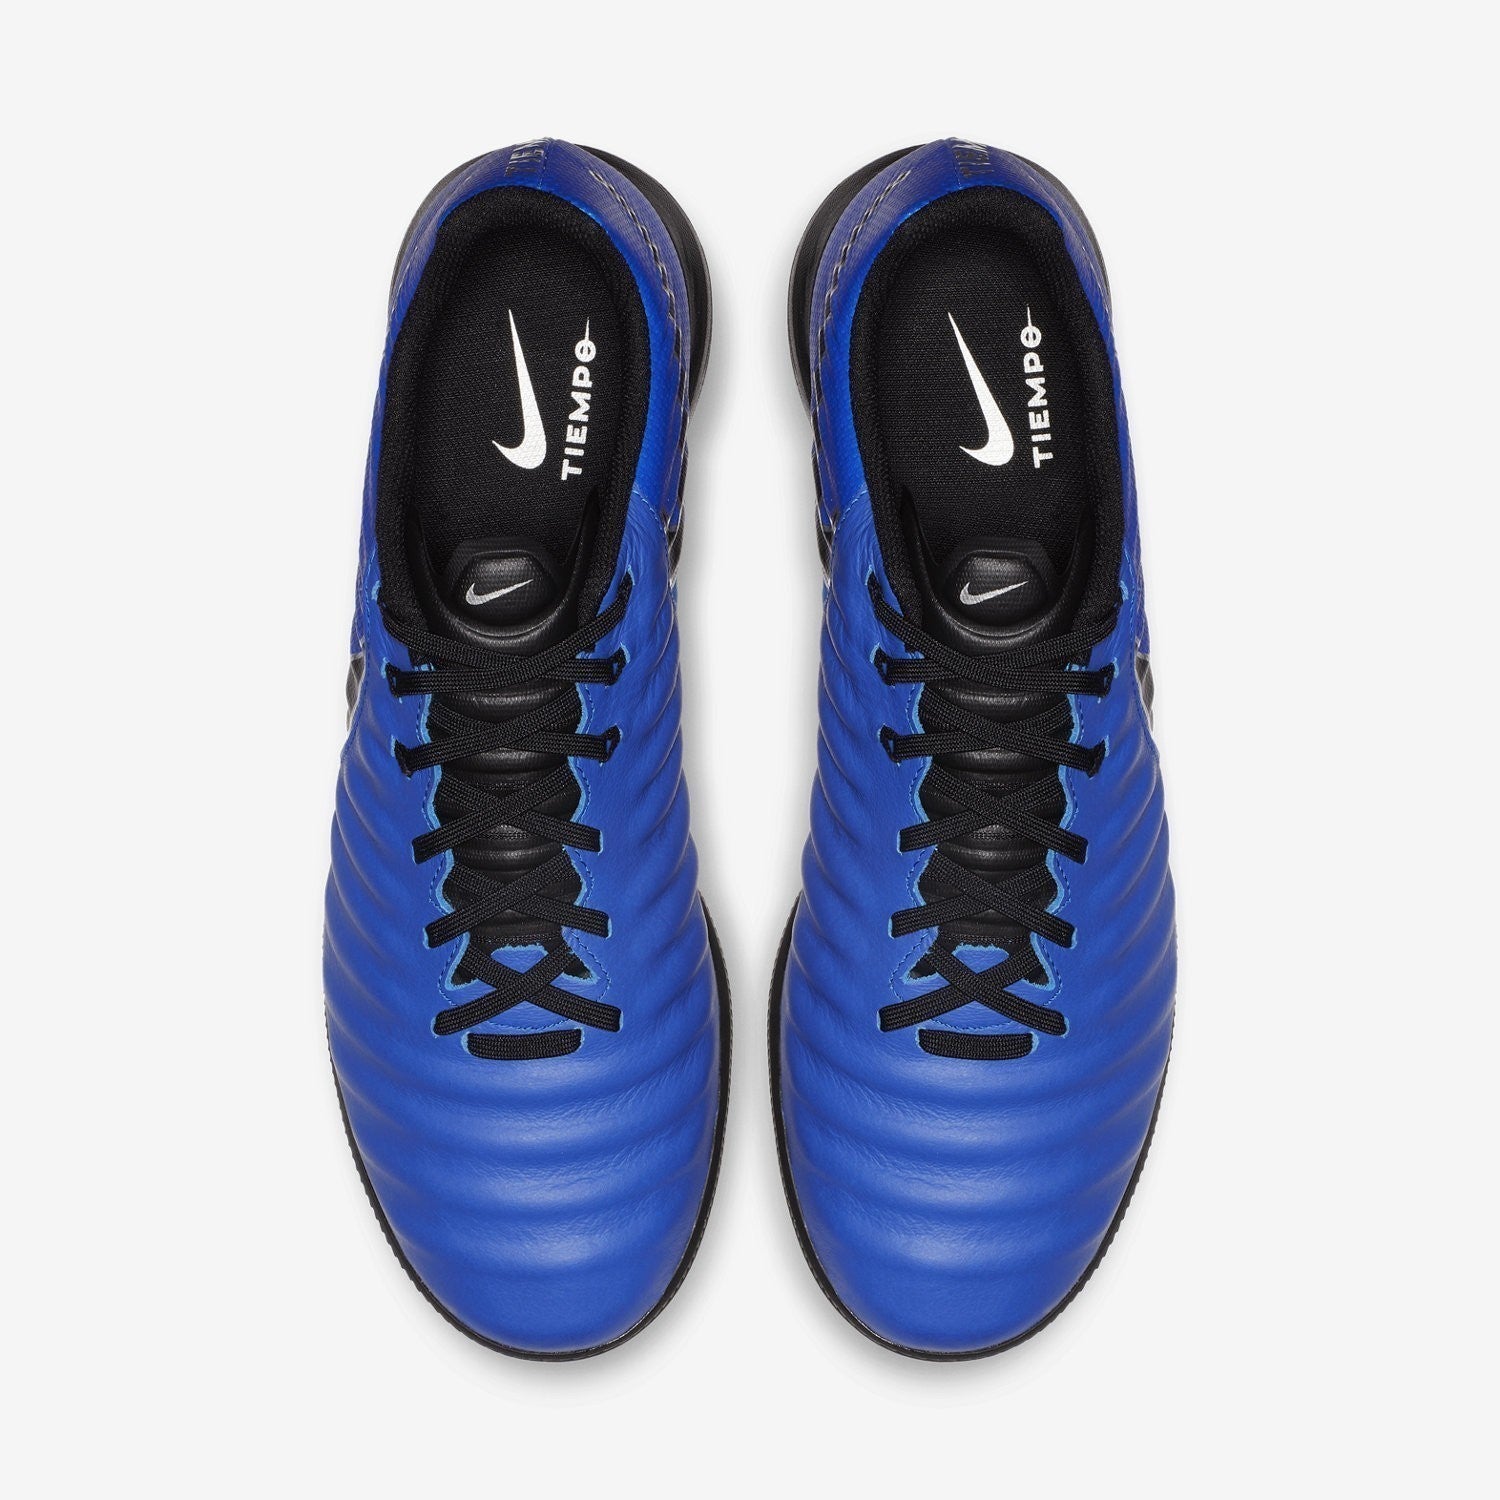 Medalla Saludar mantequilla Tiempo Lunar Legend VII Pro TF Soccer Shoes - Racer Blue/Black/Metalli